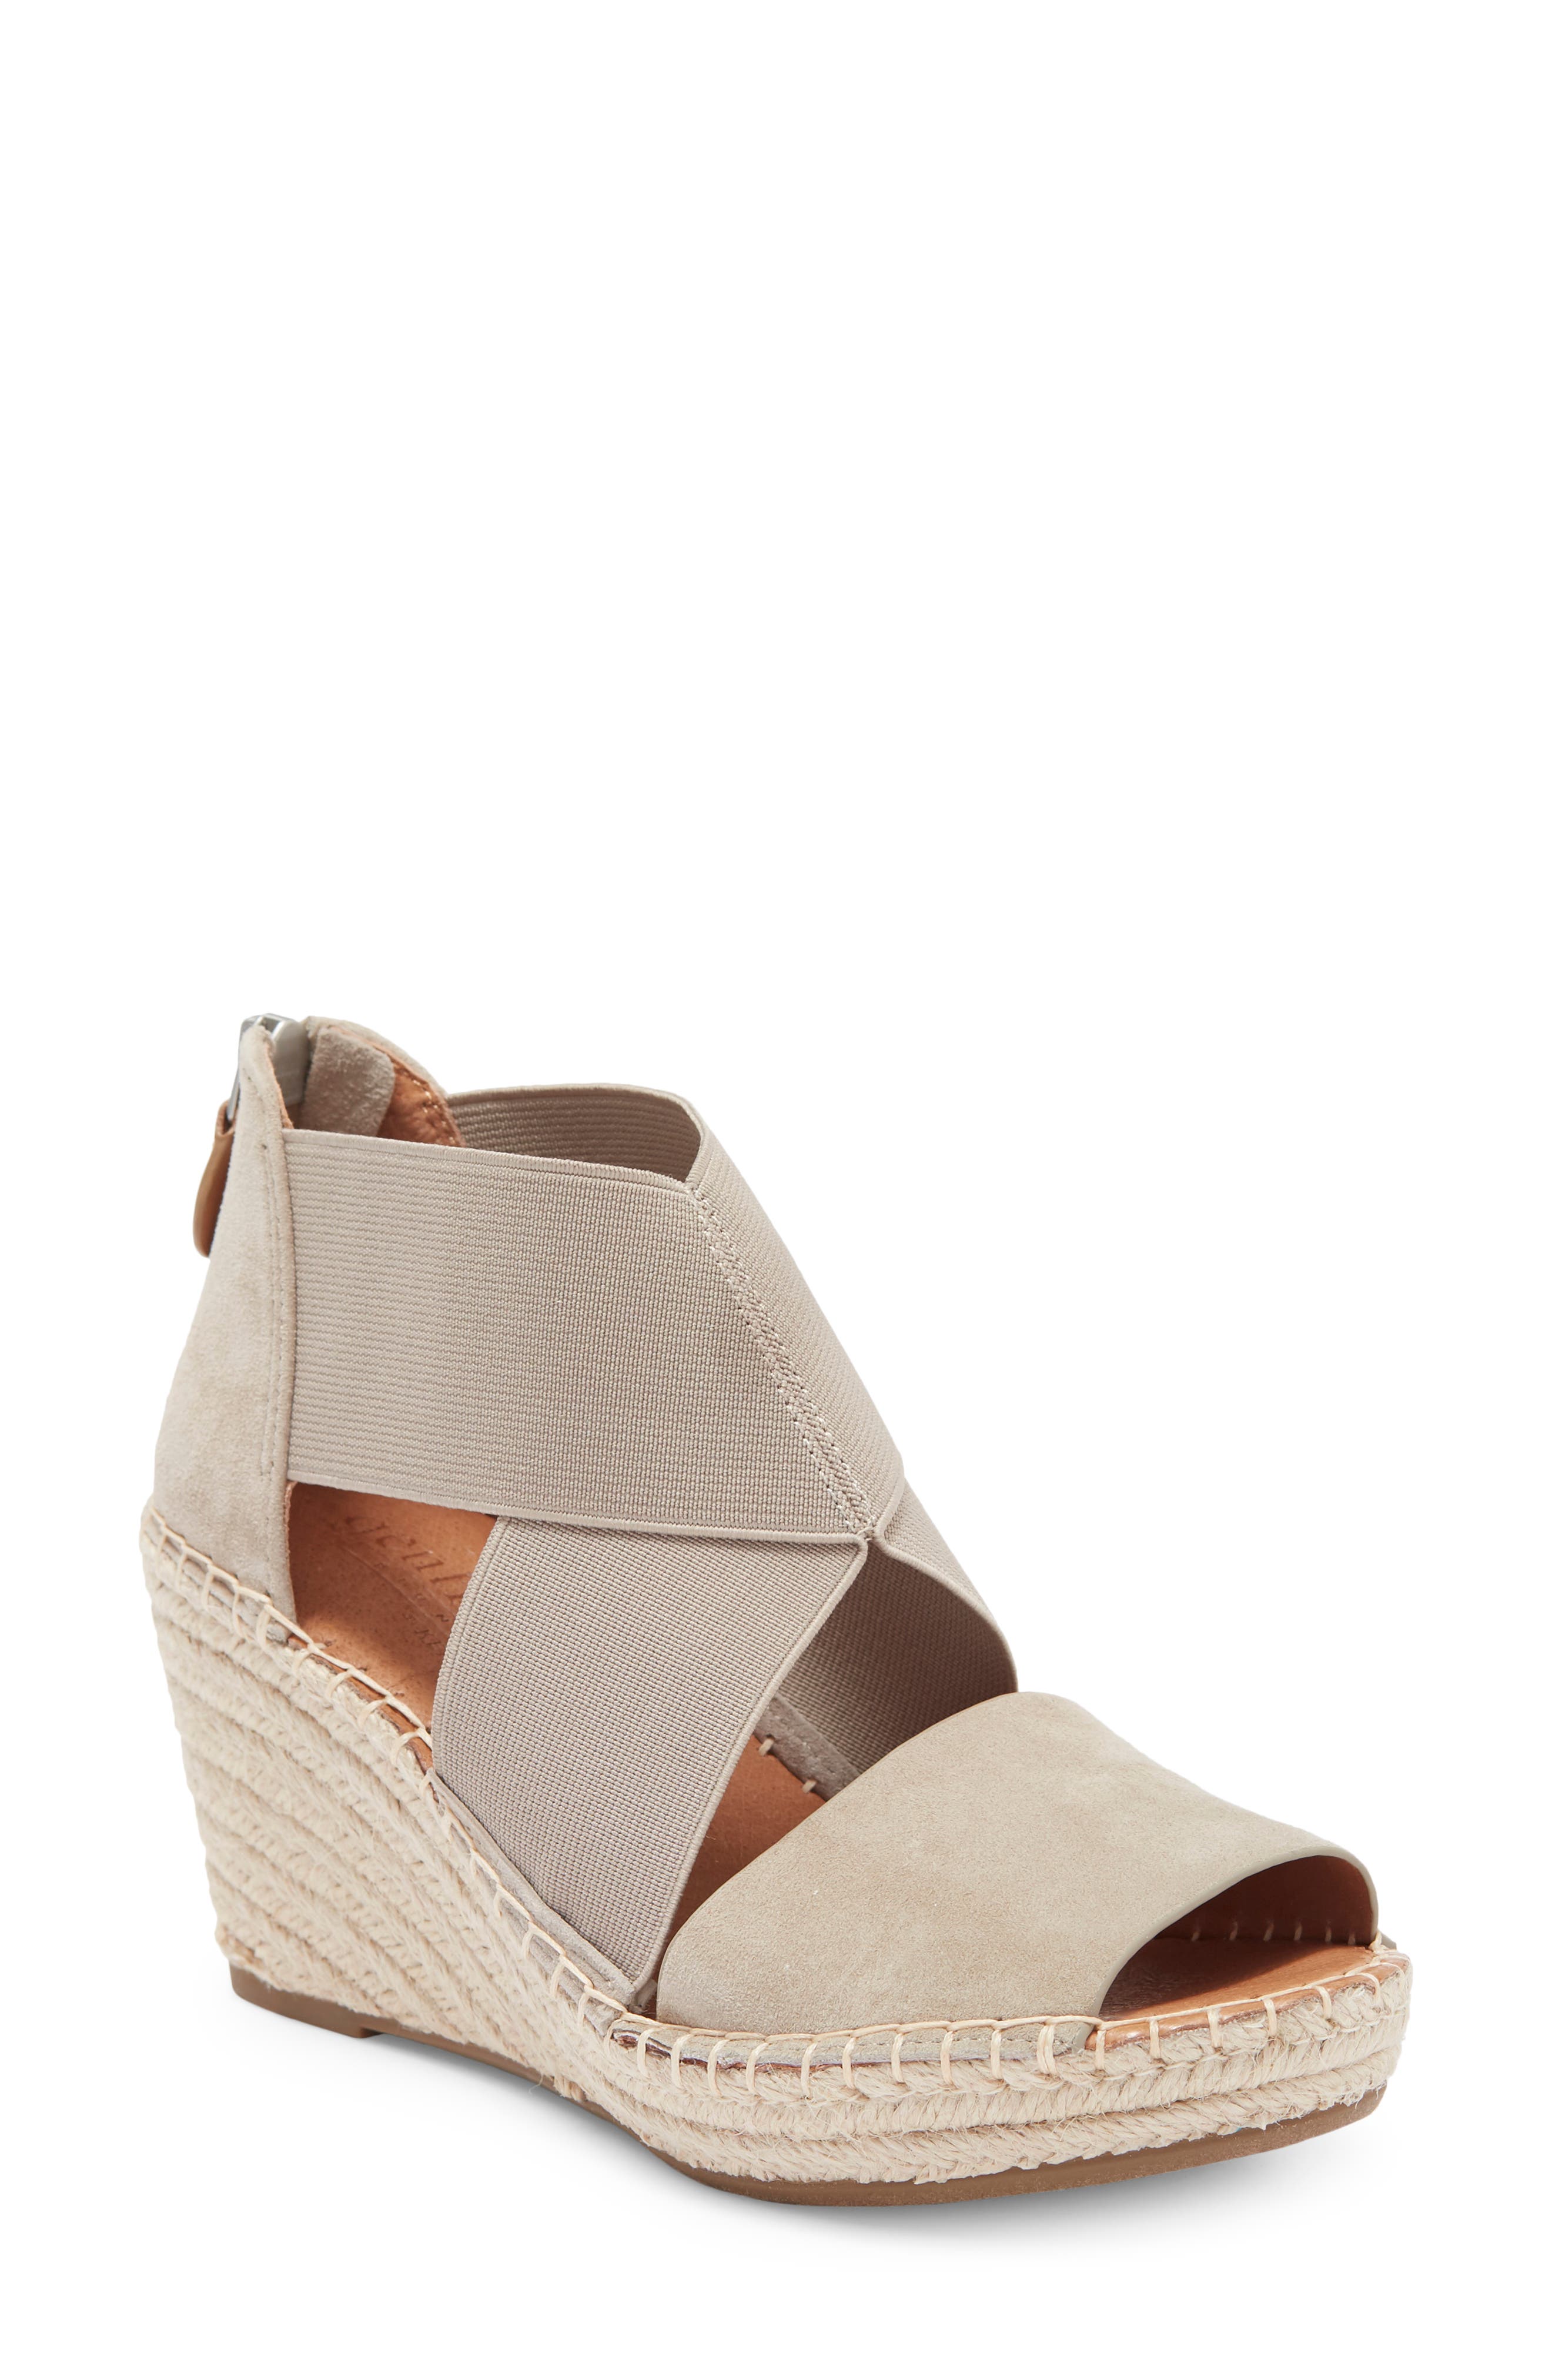 DR SCHOLL'S "Beachwood" Women's Wedge Sandals,Color Cognac~You Choose Size*New 